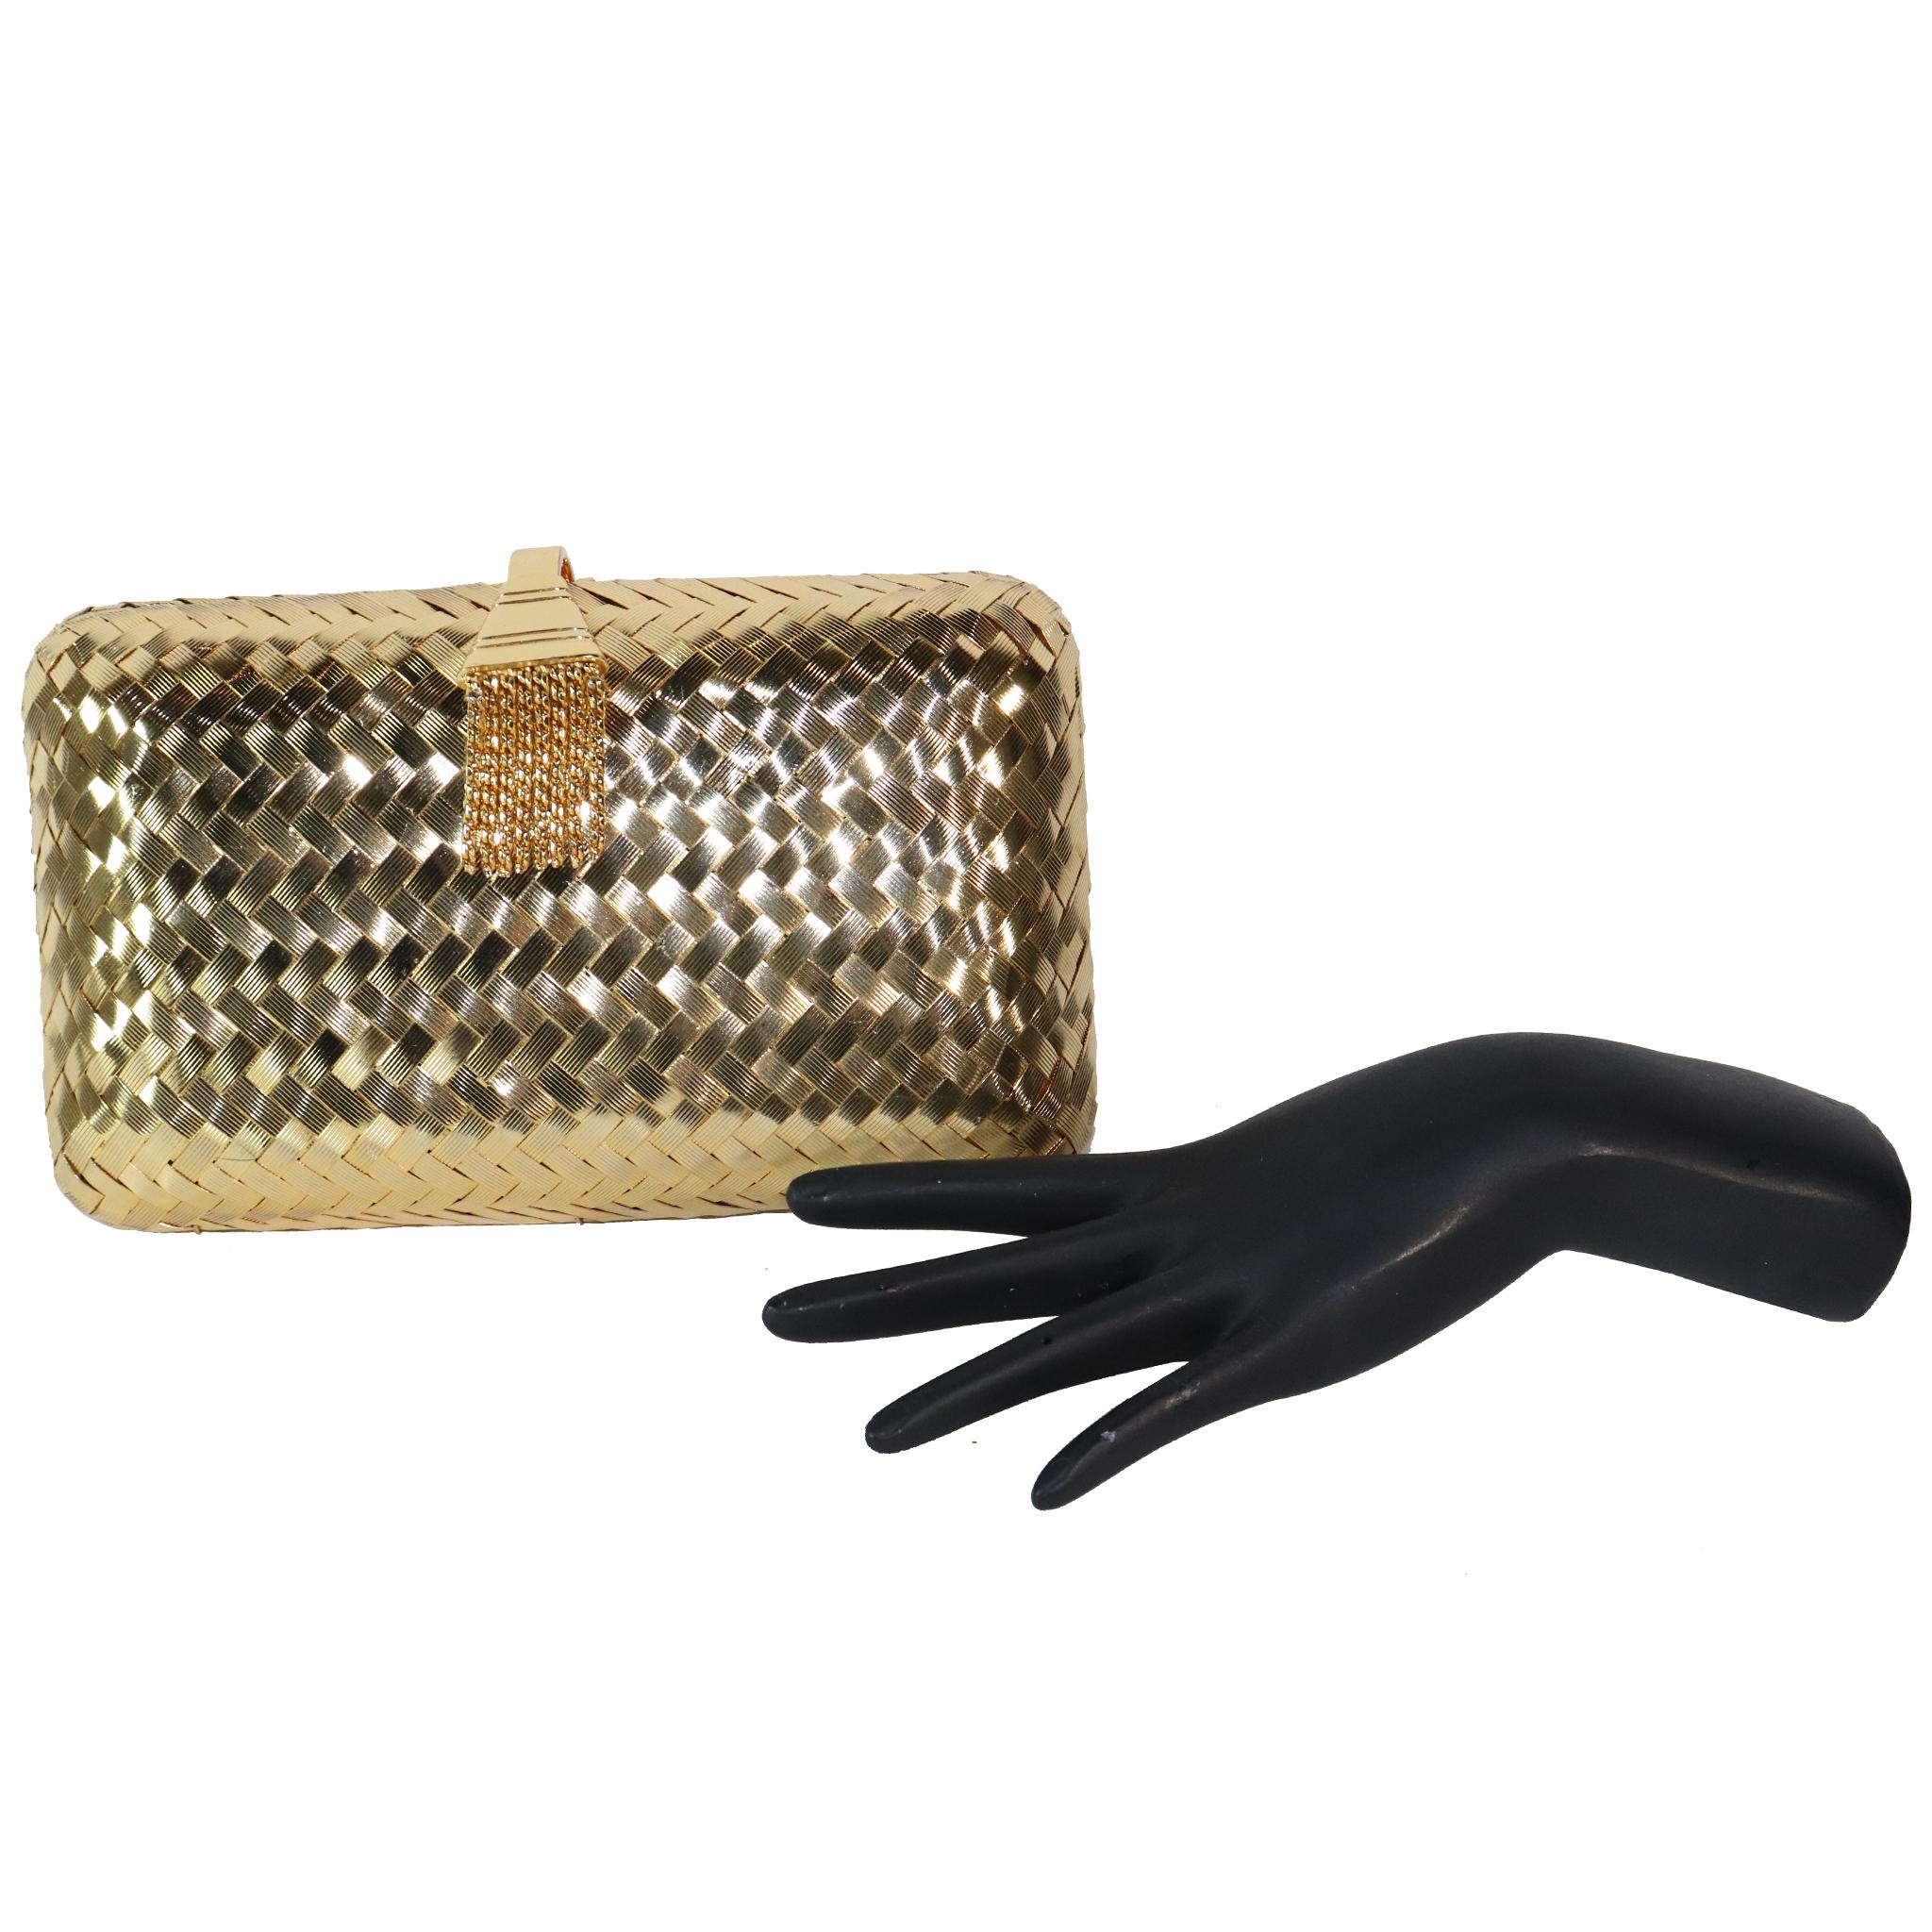 Rodo Golden Minaudière Handbag with Shoulder Chain 1